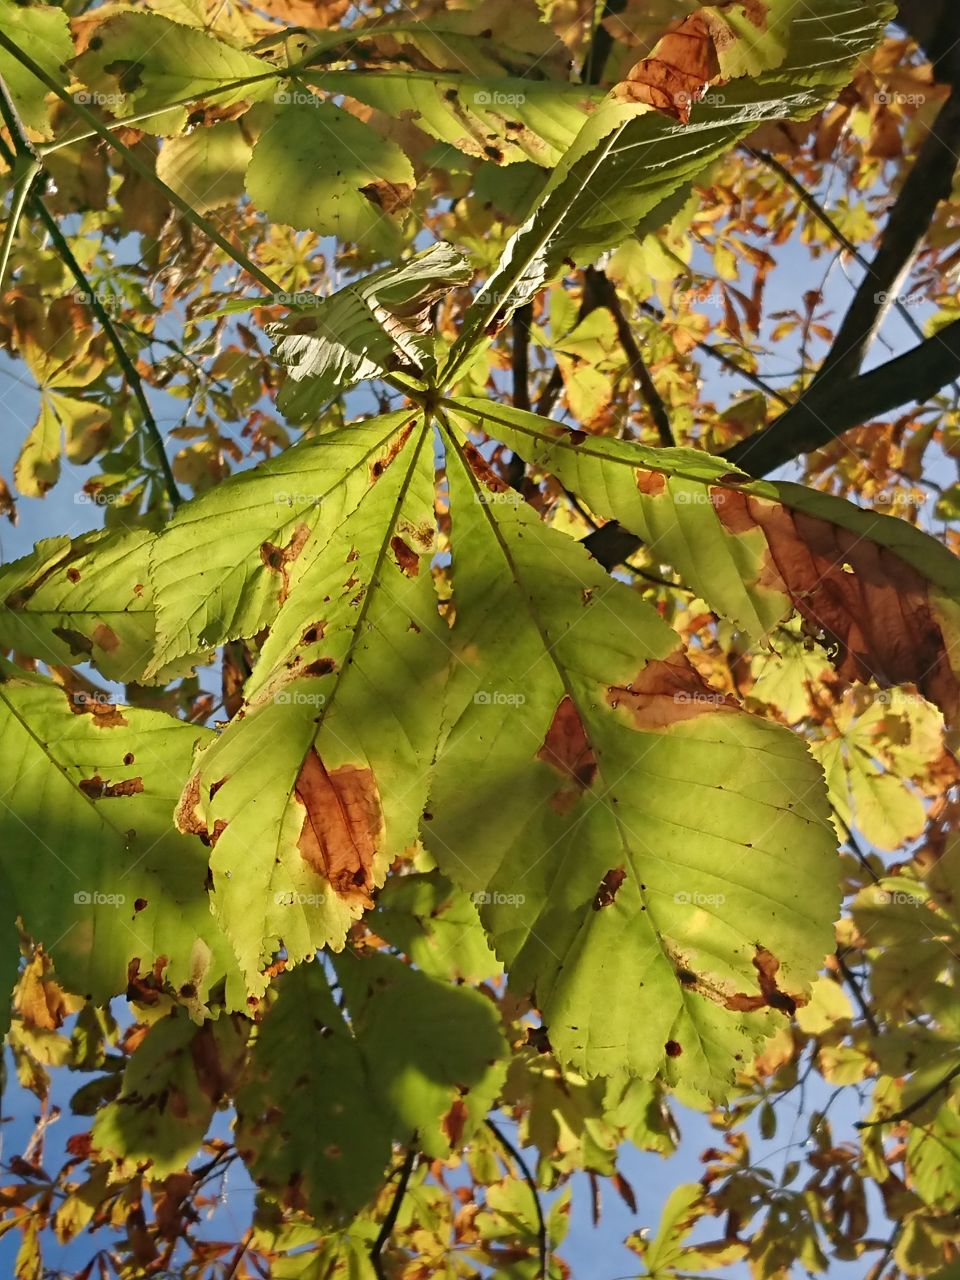 Nature
Horse chestnut
Autumn
Beautiful
Sunny